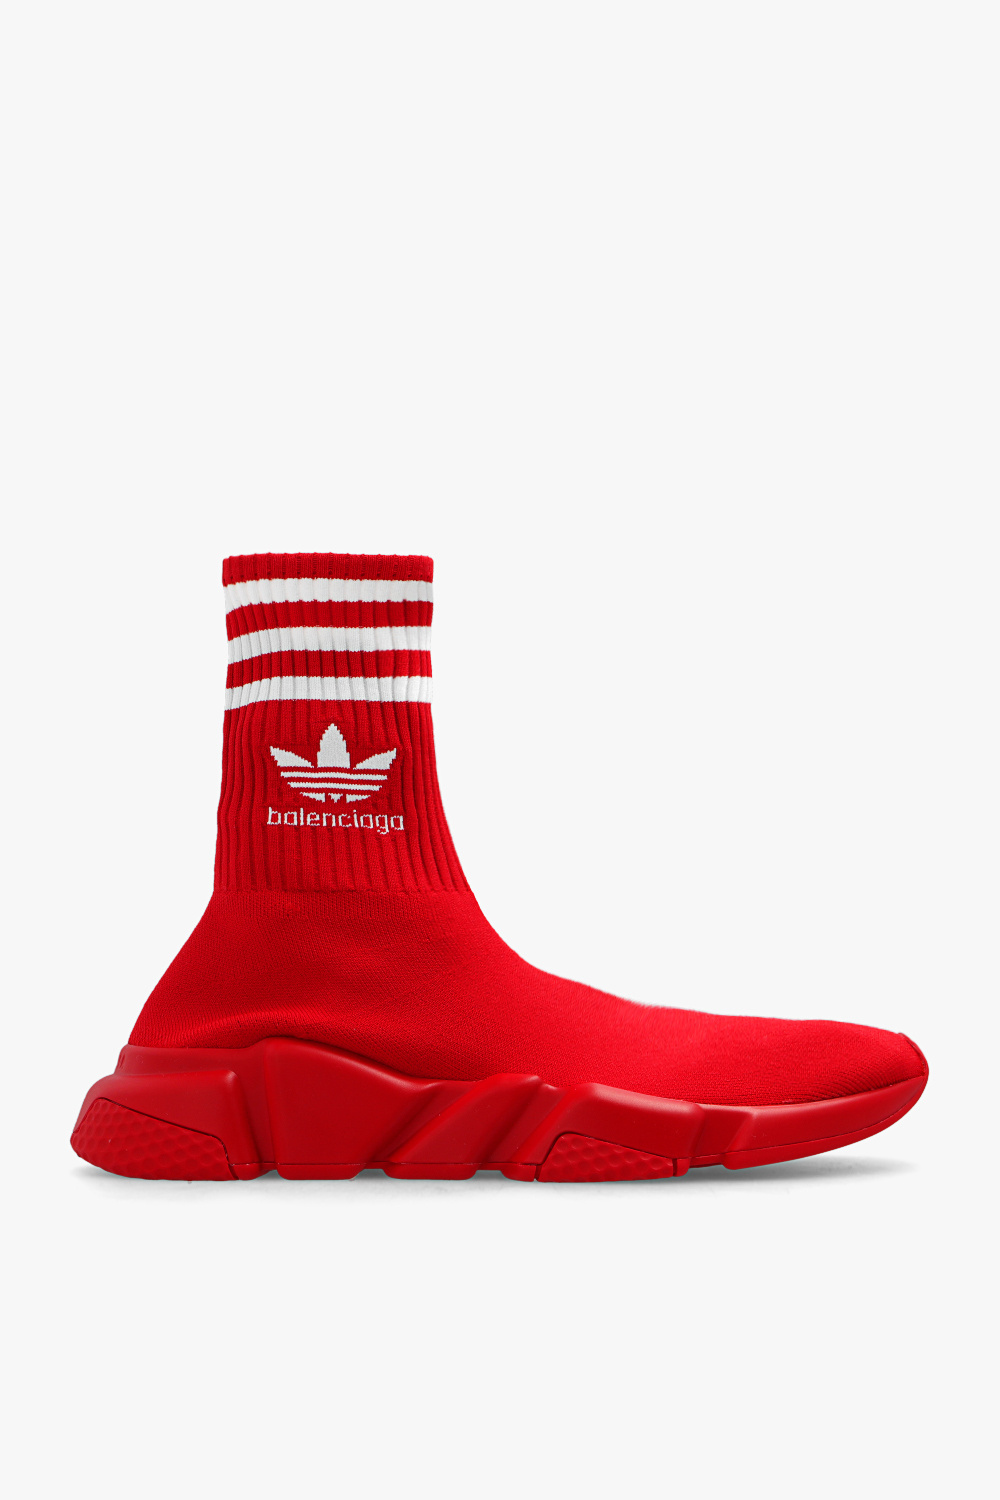 Red 'Speed LT Soccer' sock sneakers Balenciaga - Vitkac GB